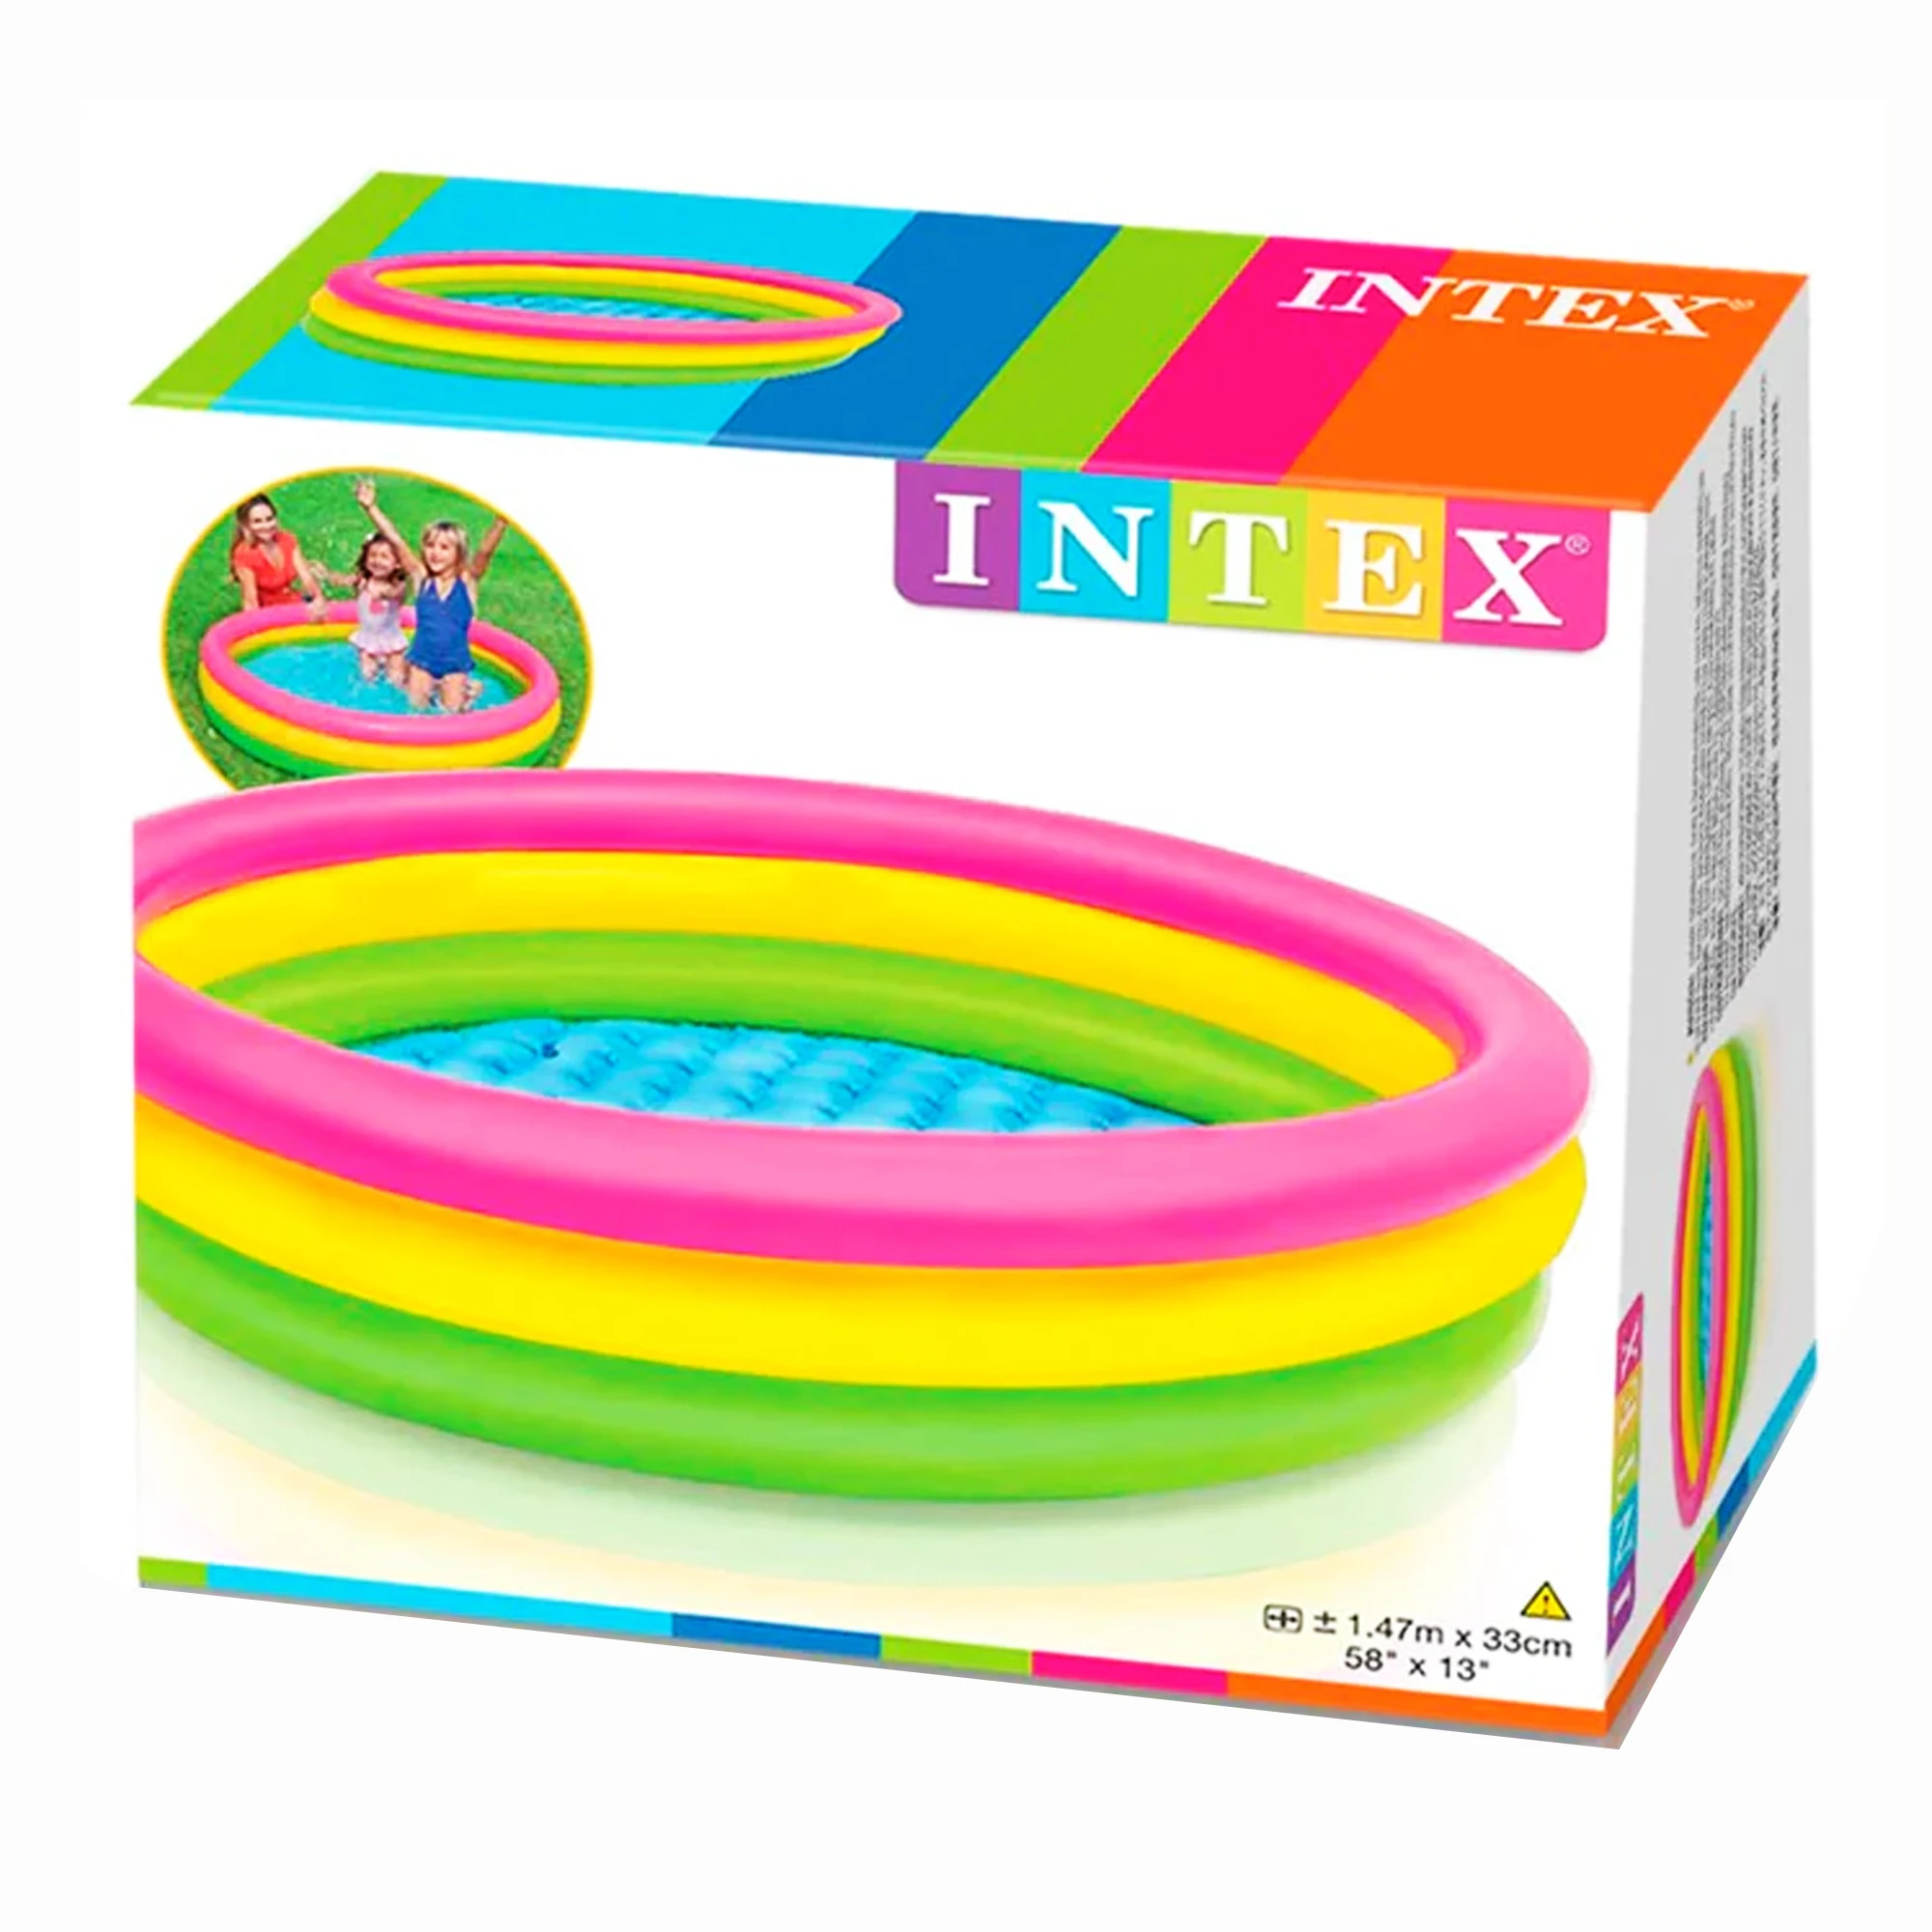 Accesorios de piscina de colores multicolores con churro de 150cm x 6cm de  plástico - AliExpress